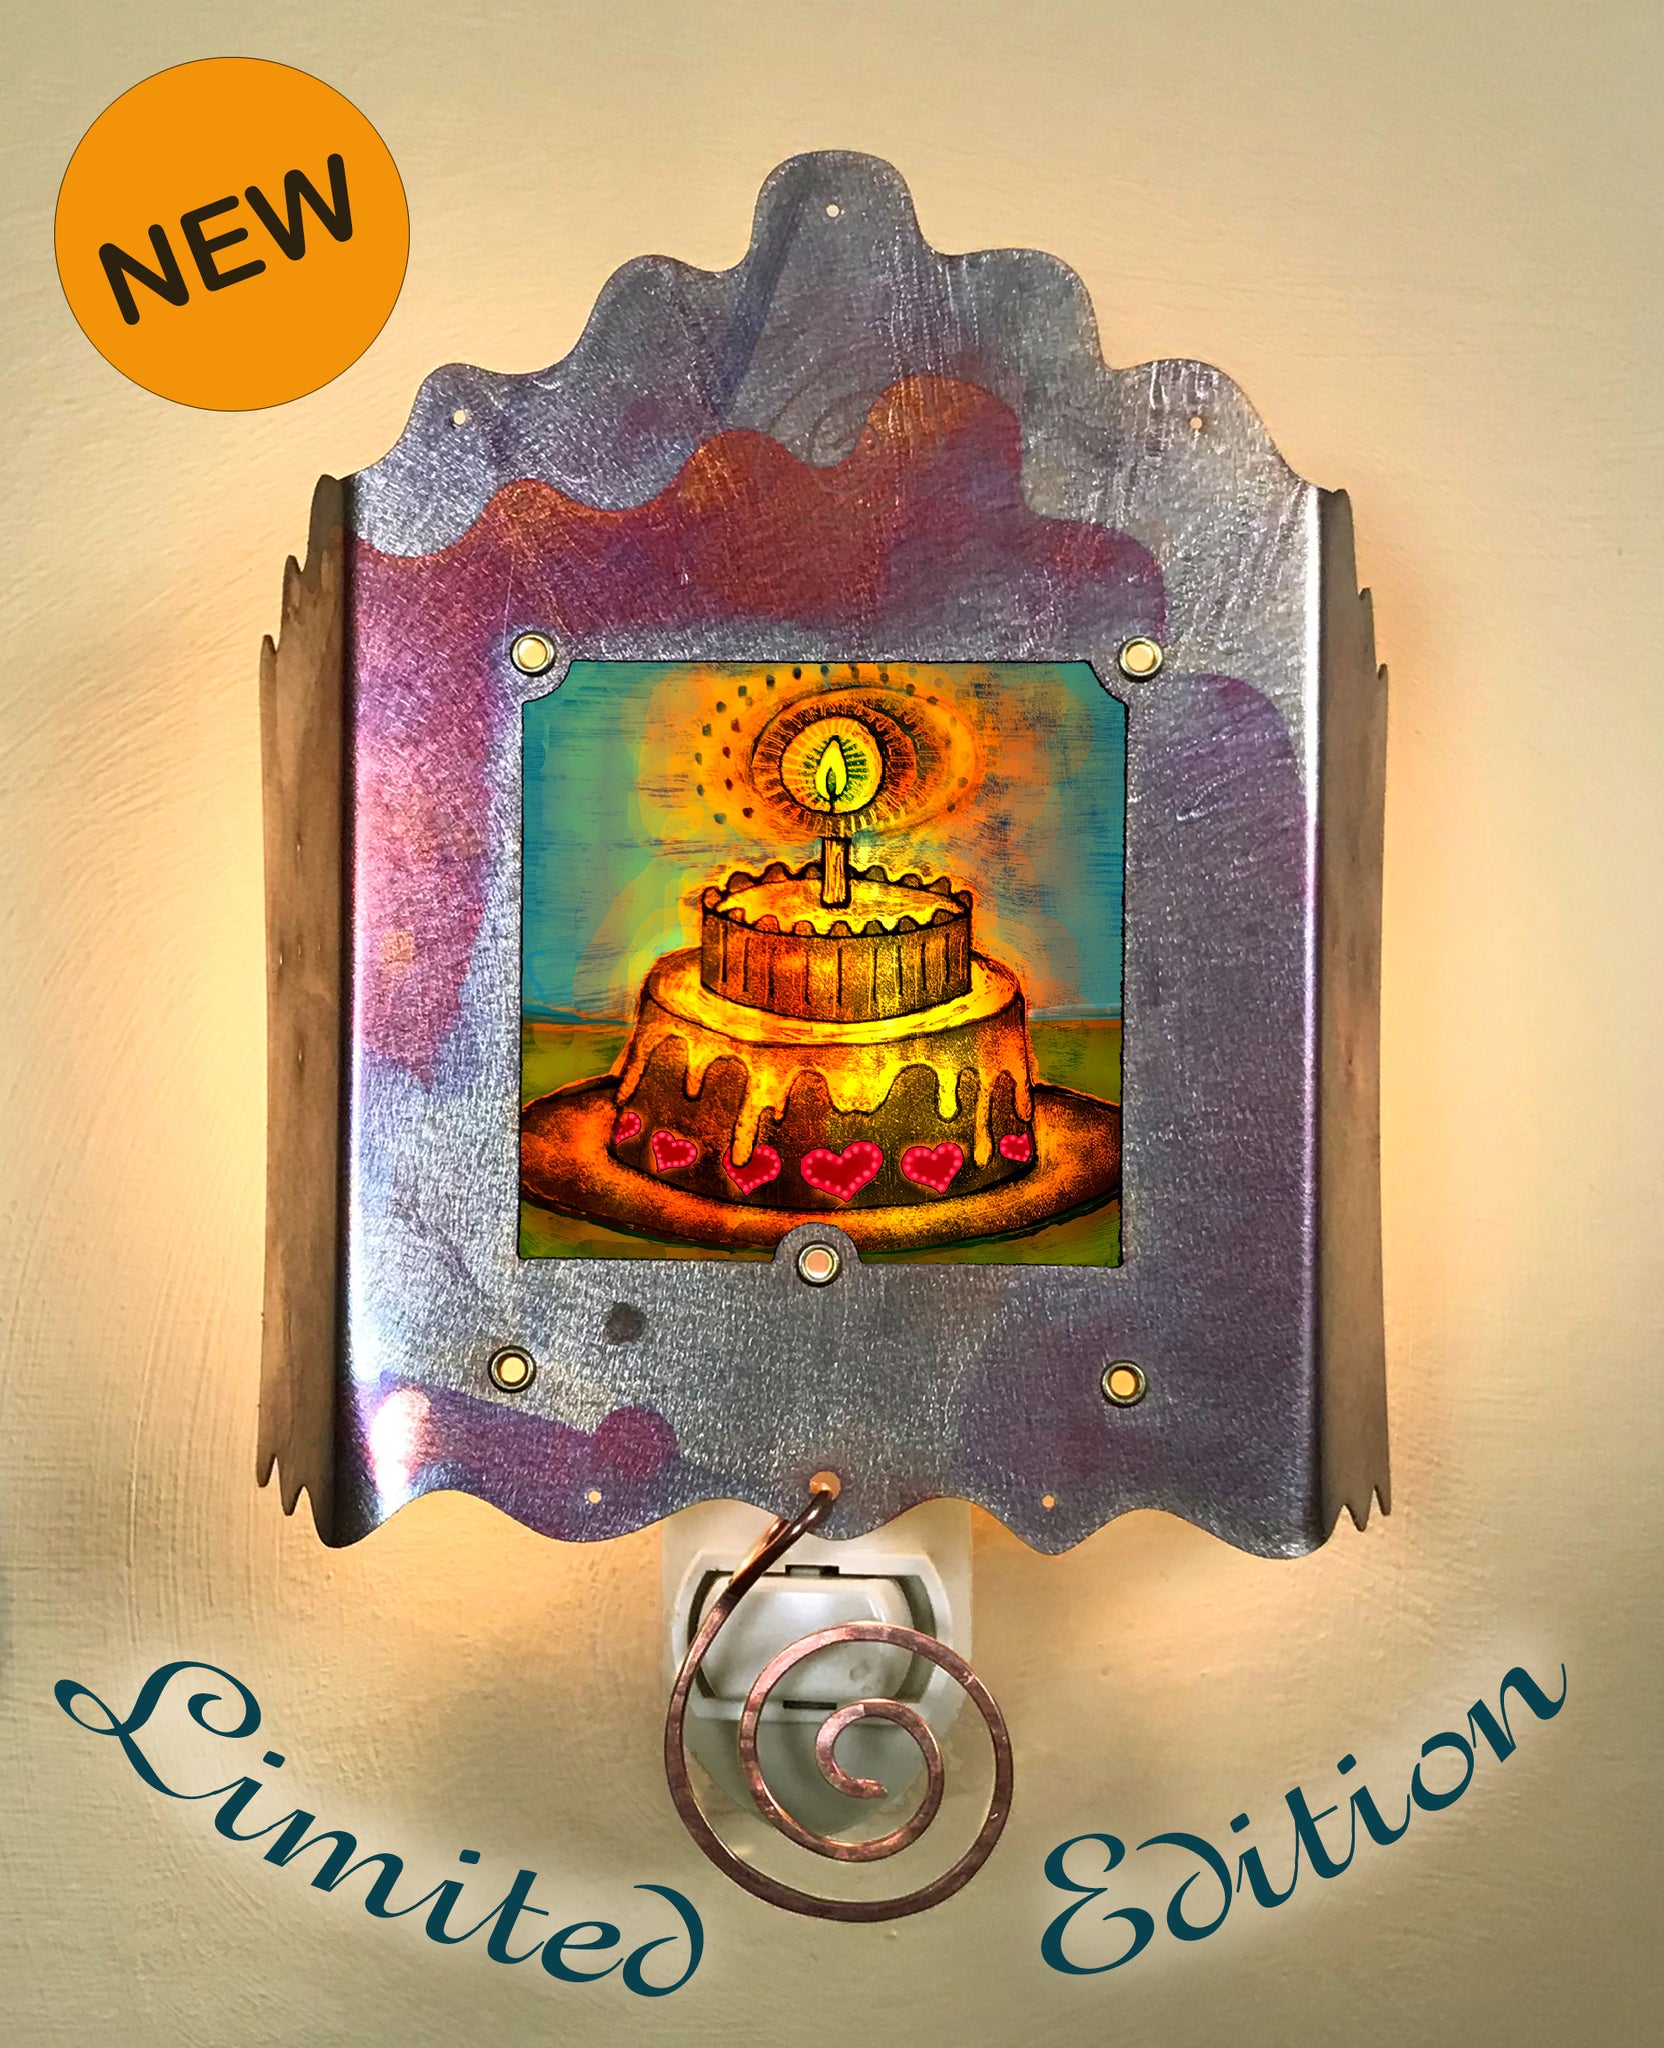 Celebration Cake (limited edition) - 51 LEFT!